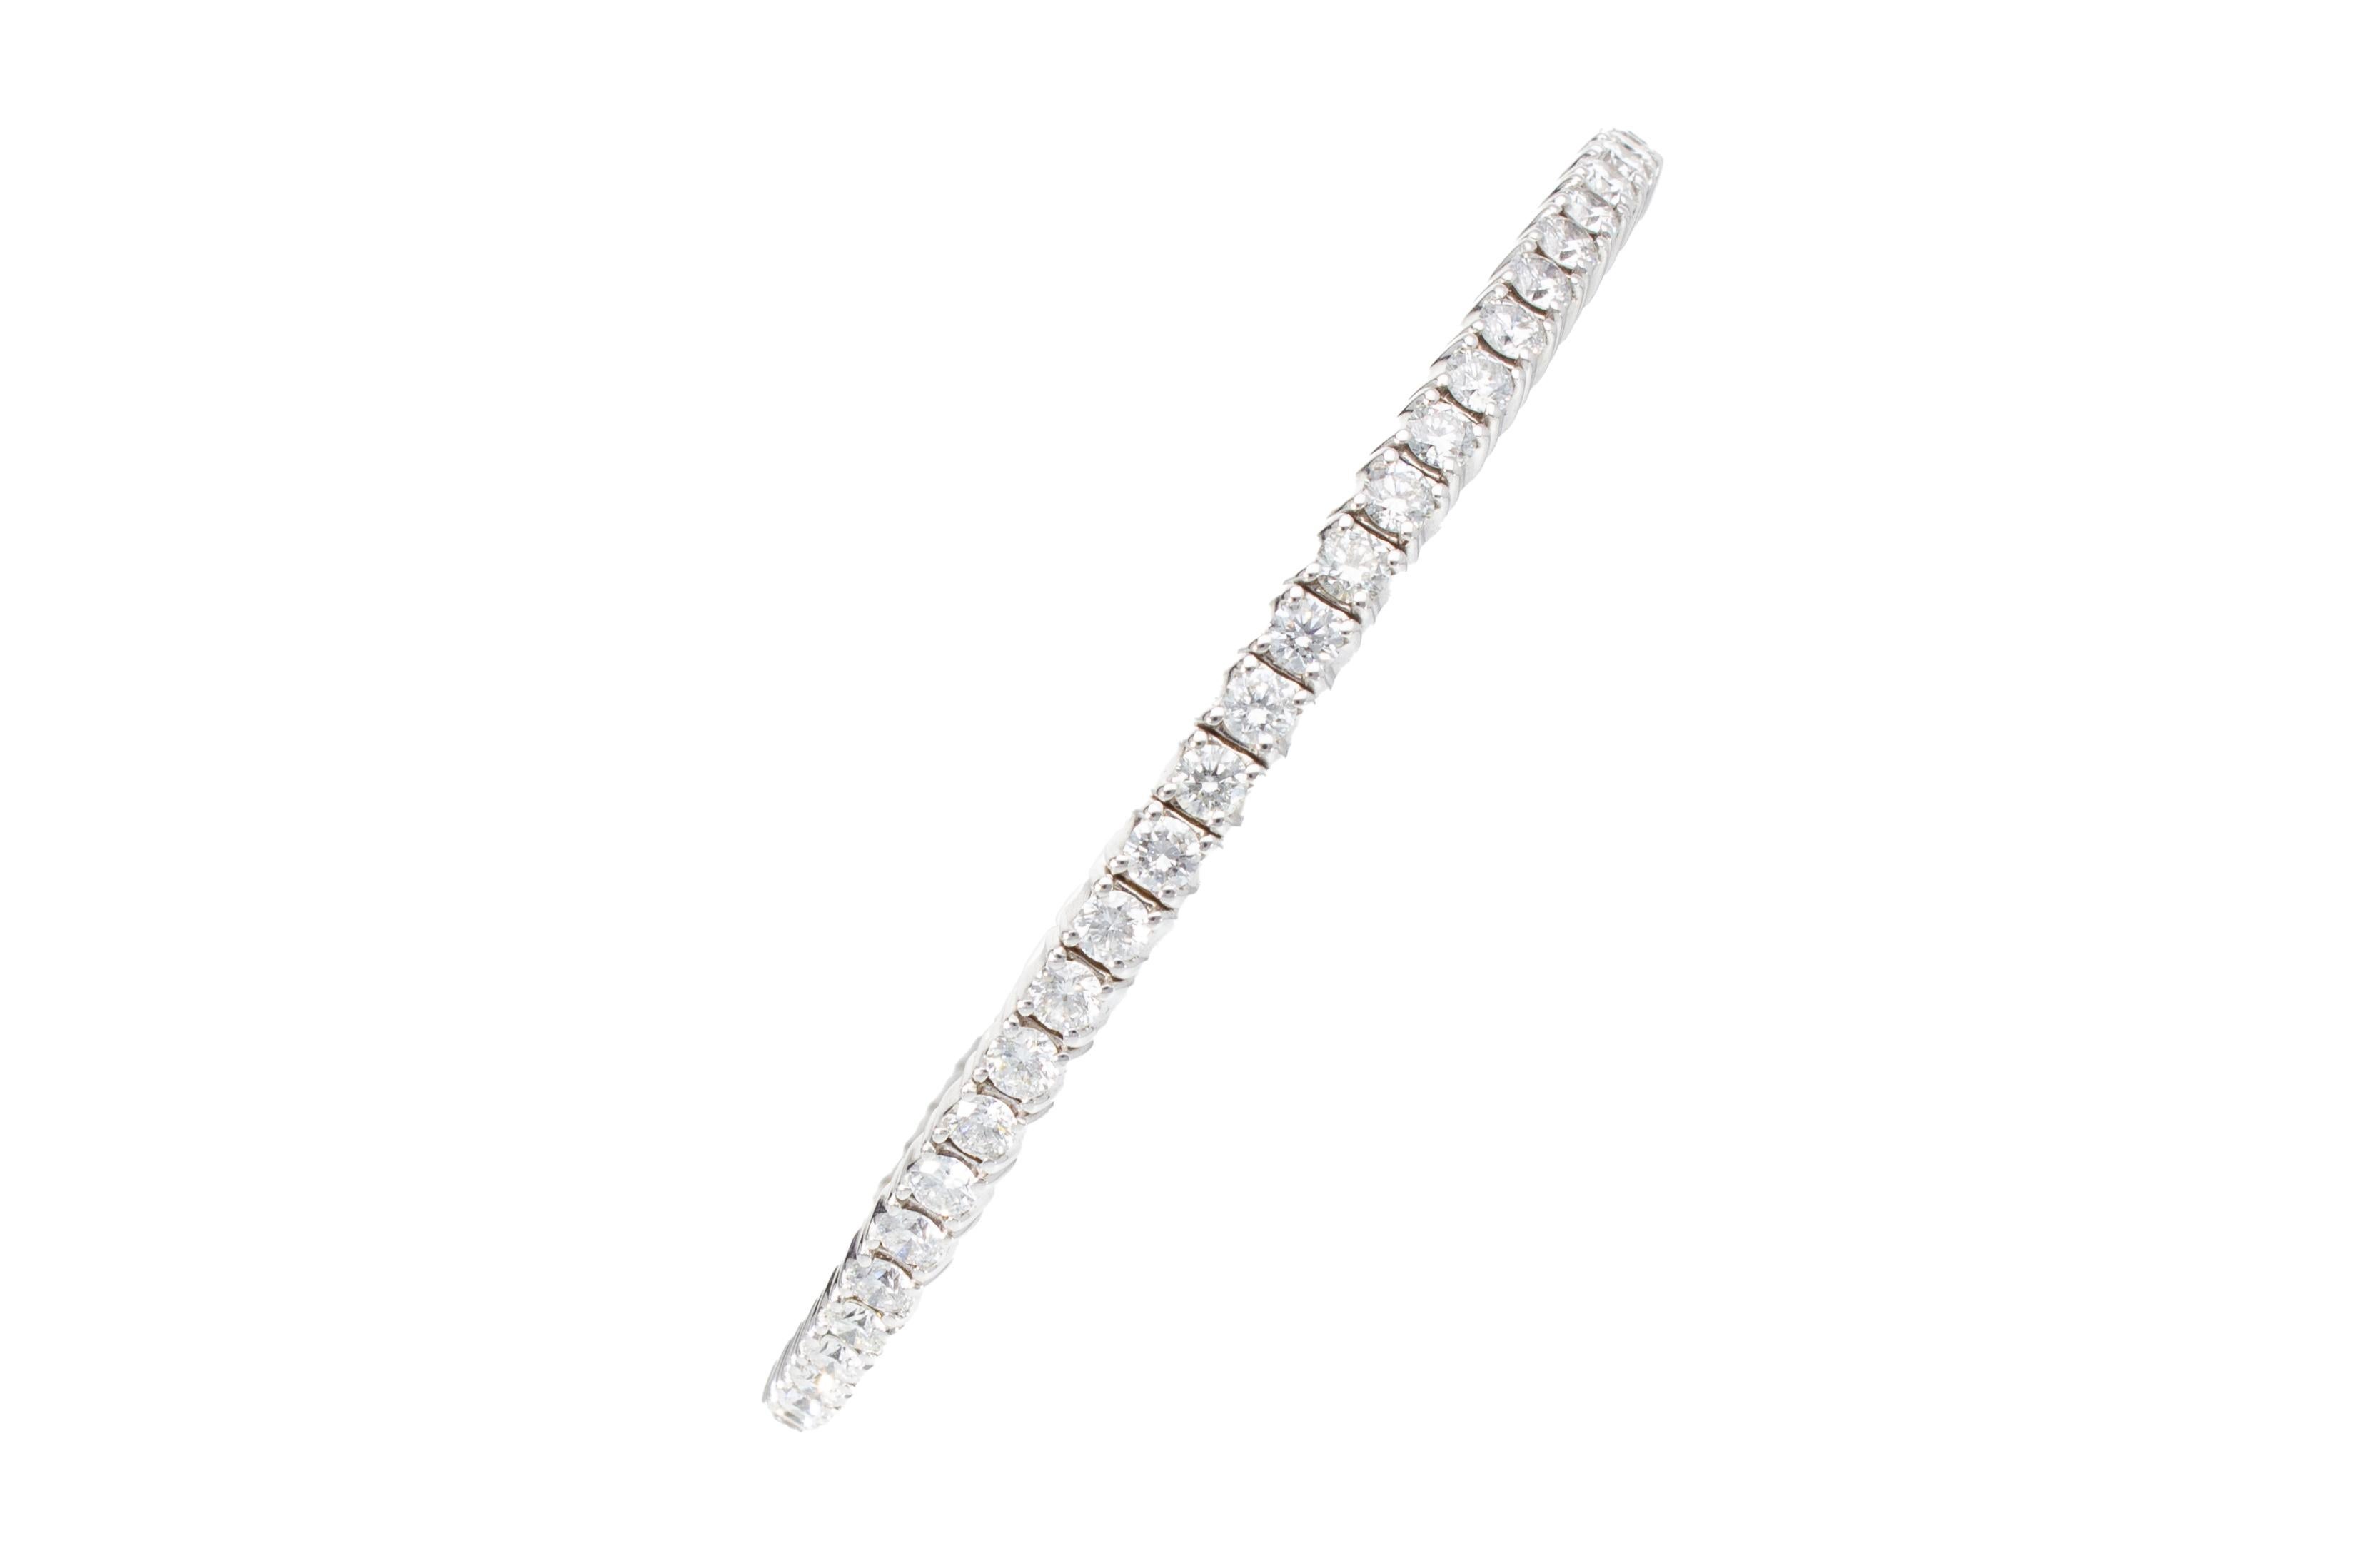 5.80ct 18ct white gold tennis bracelet guaranteed g/h colour si purity natural diamonds